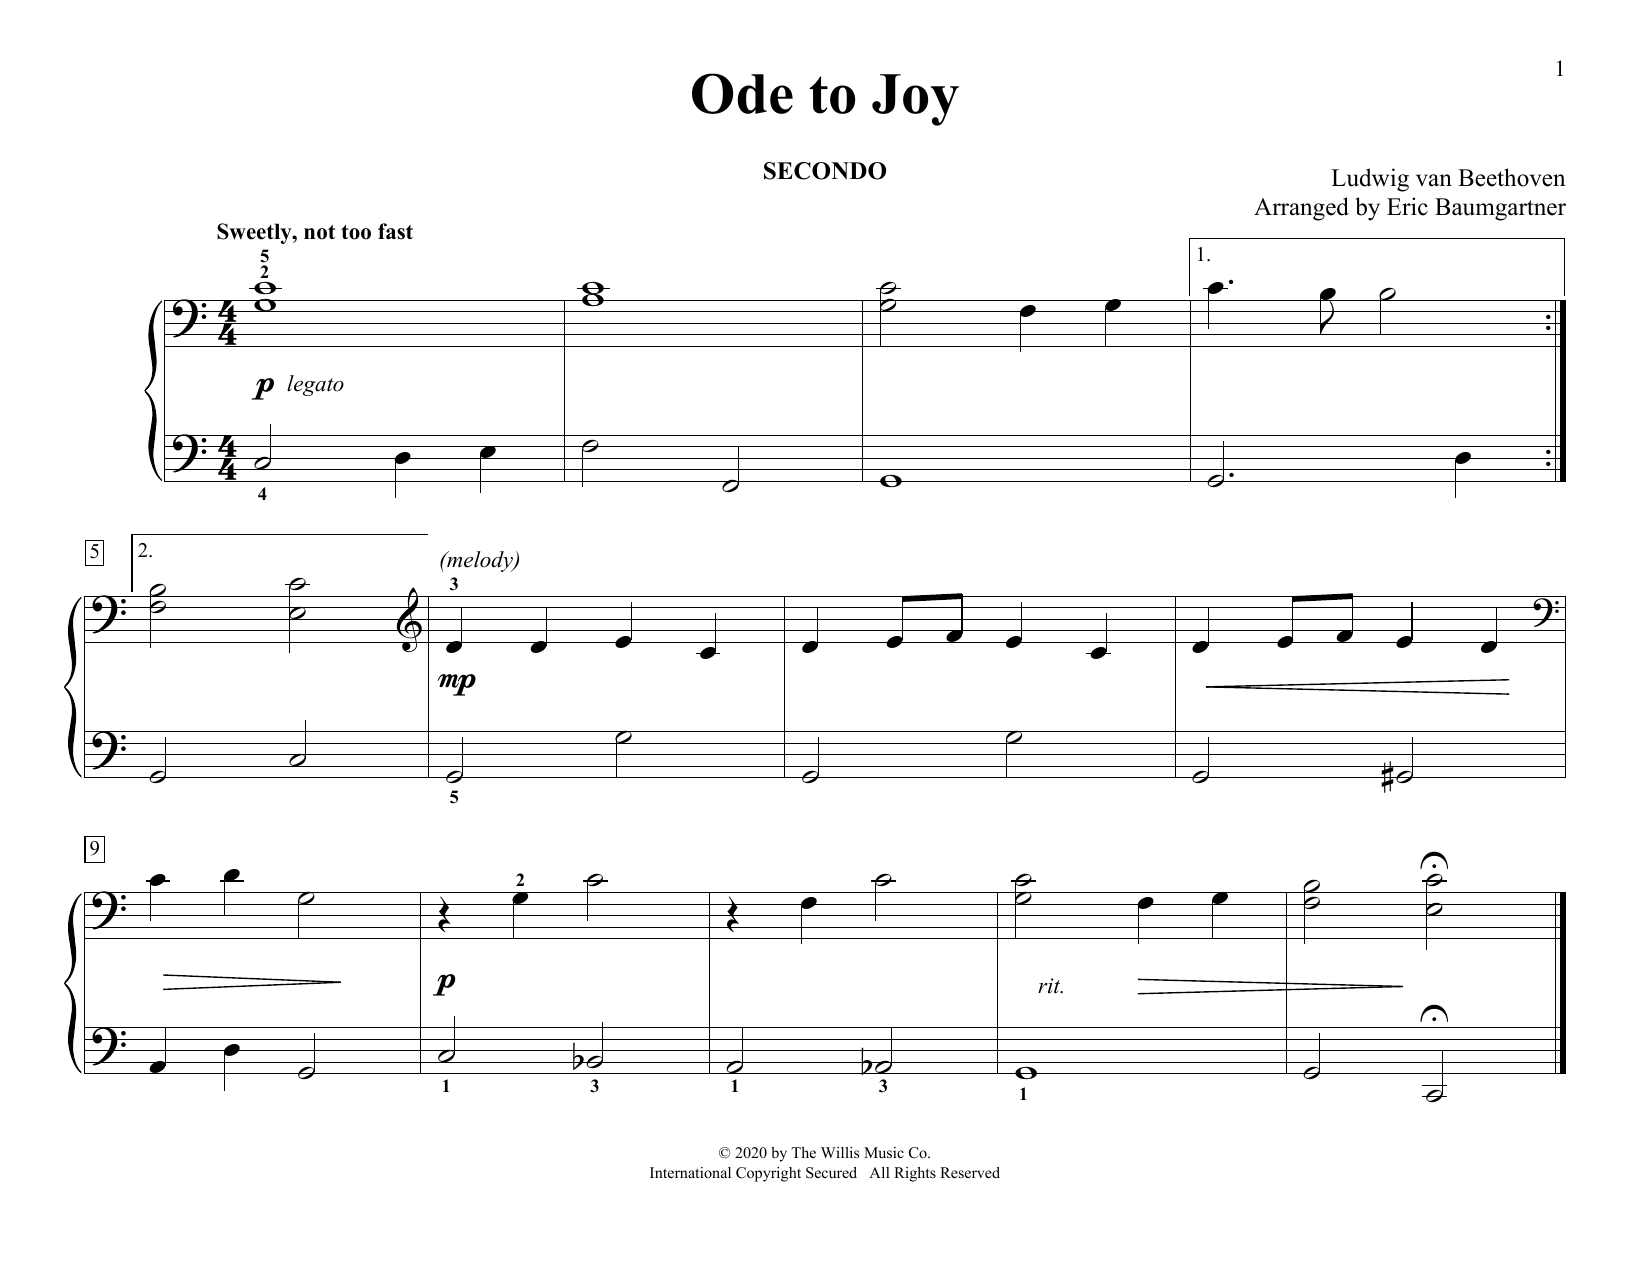 Ludwig van Beethoven Ode To Joy (arr. Eric Baumgartner) Sheet Music Notes & Chords for Piano Duet - Download or Print PDF